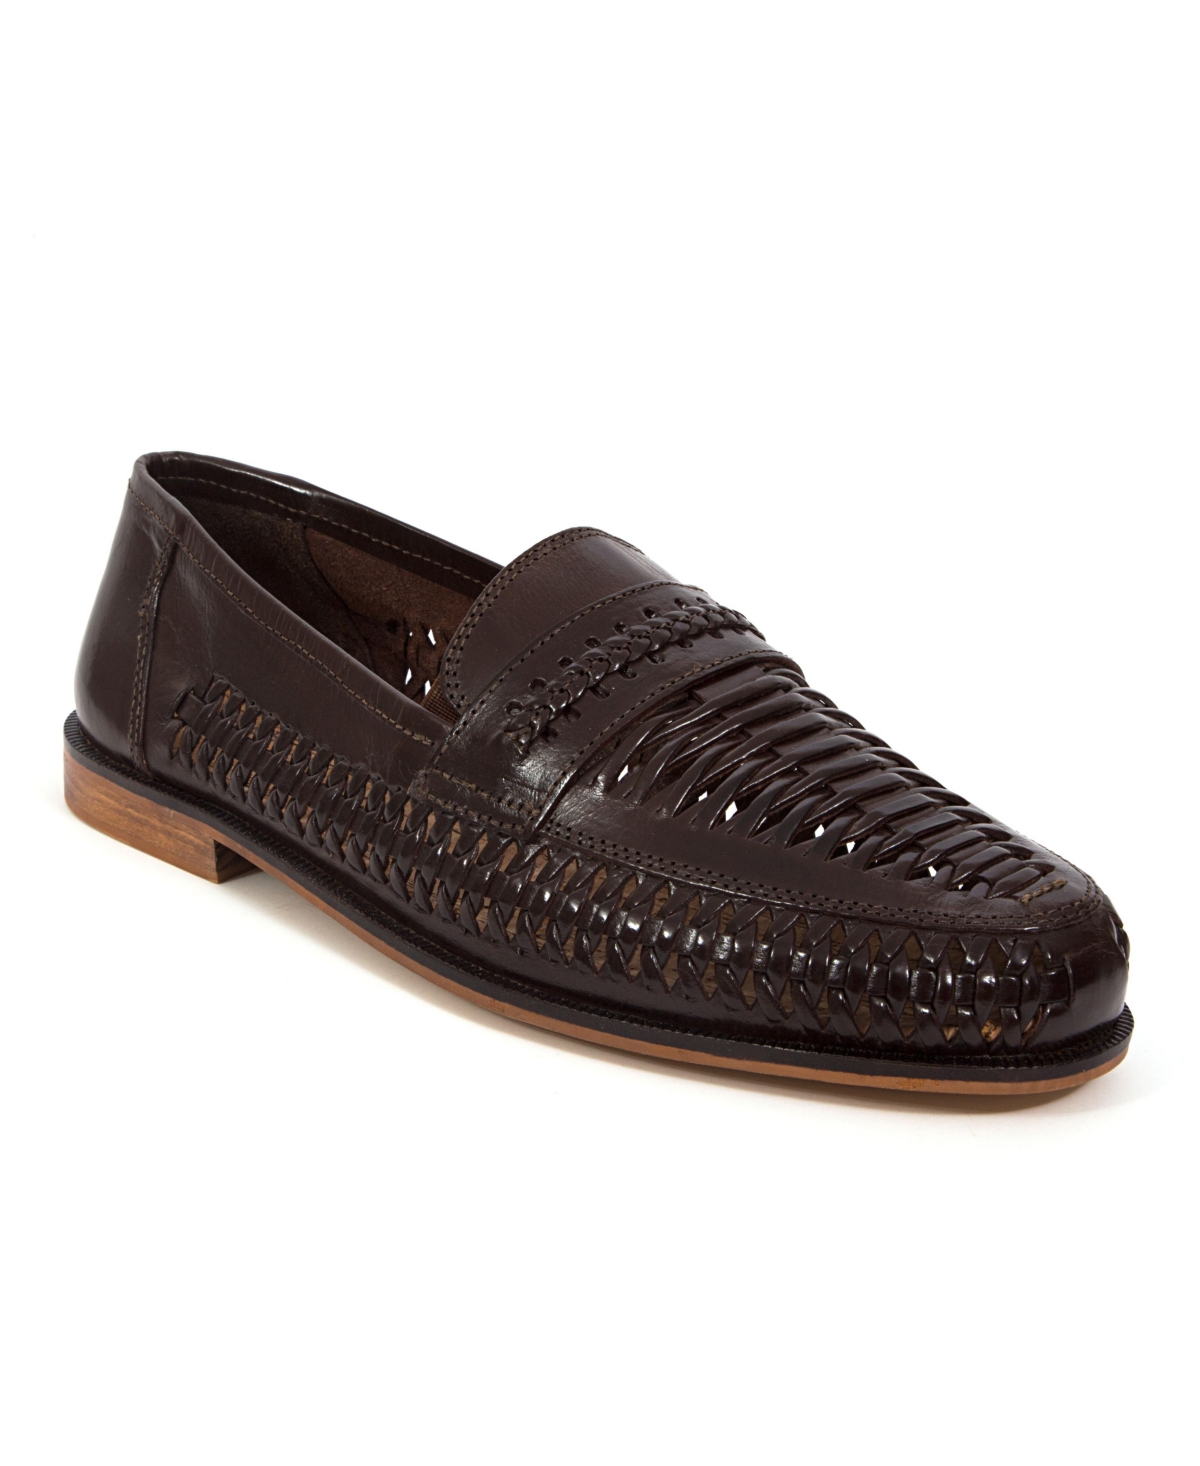 Men's Puebla Huarache Slip-on Loafers - Dark Brown